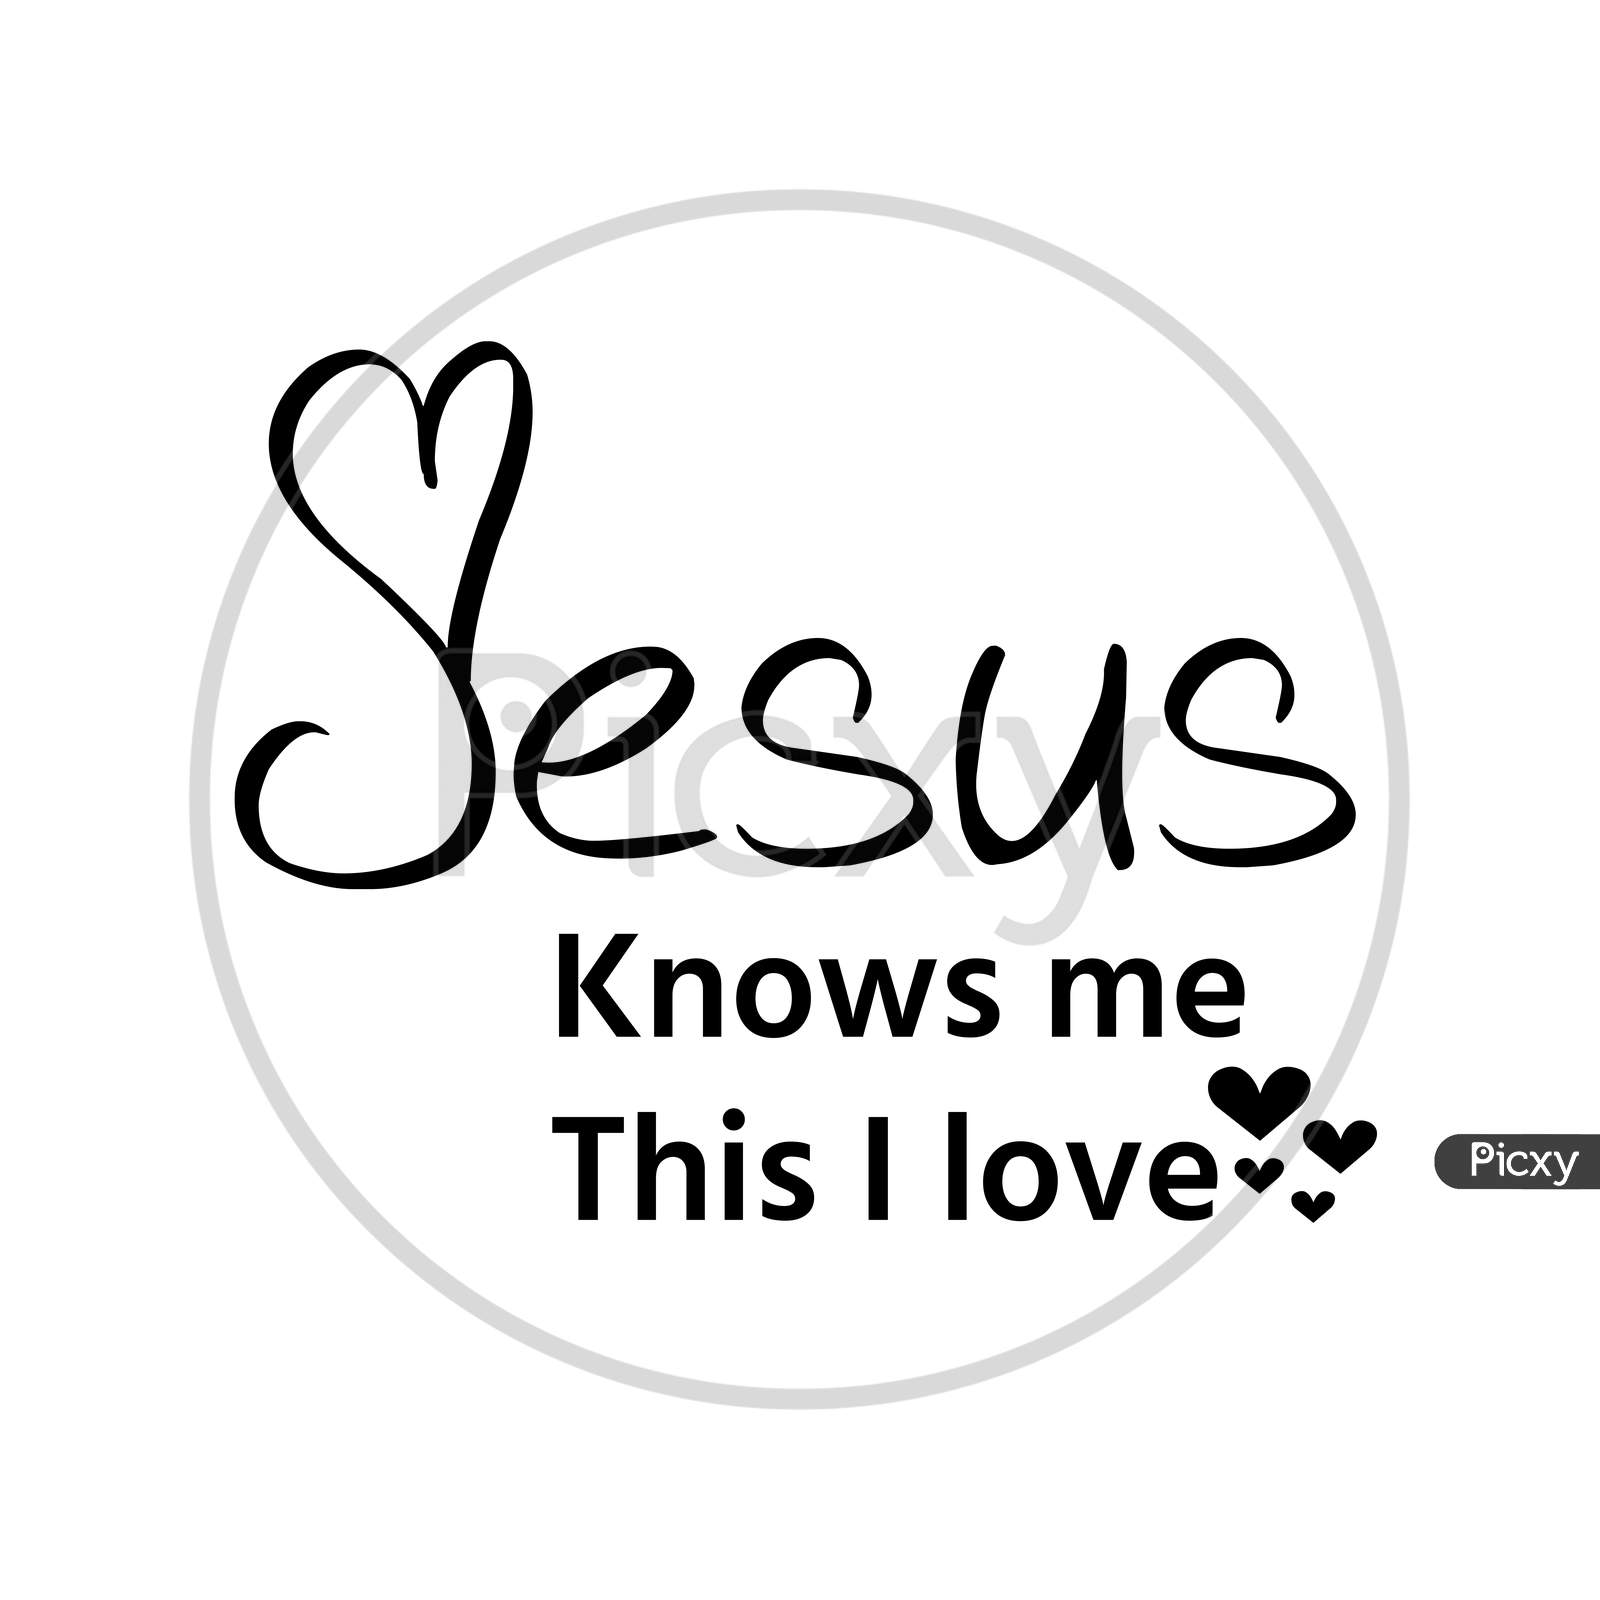 Biblical Phrase - Jesus knows me This I love